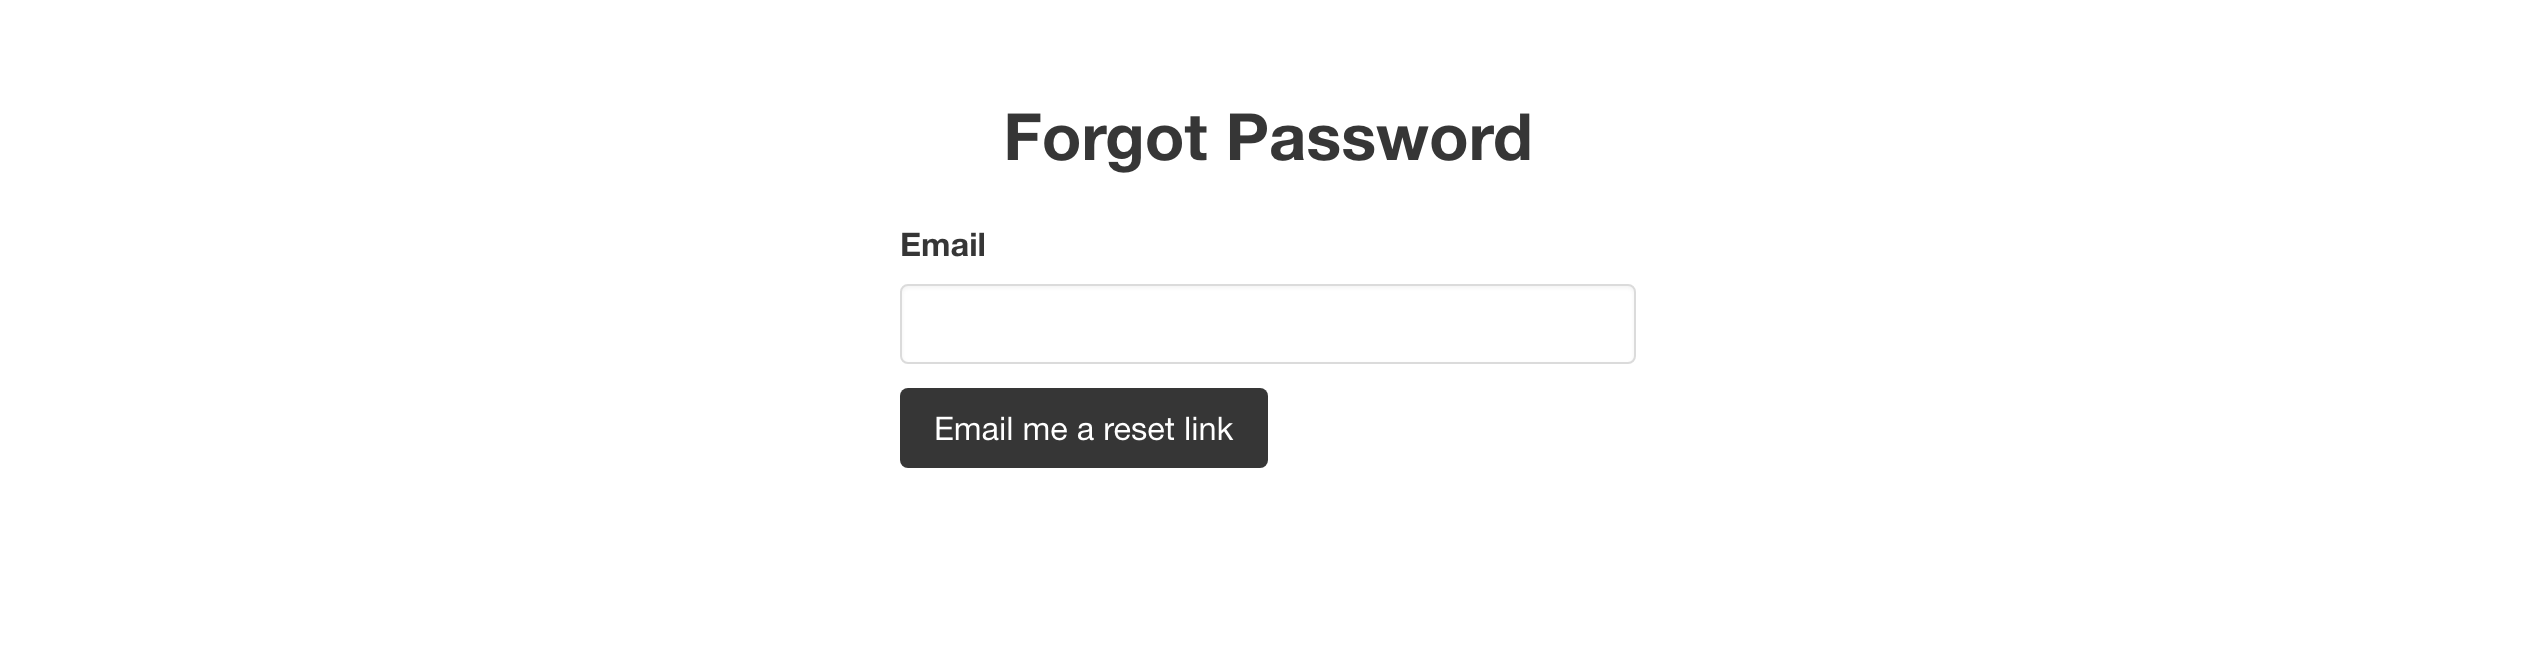 Nuxt Reset Password Page